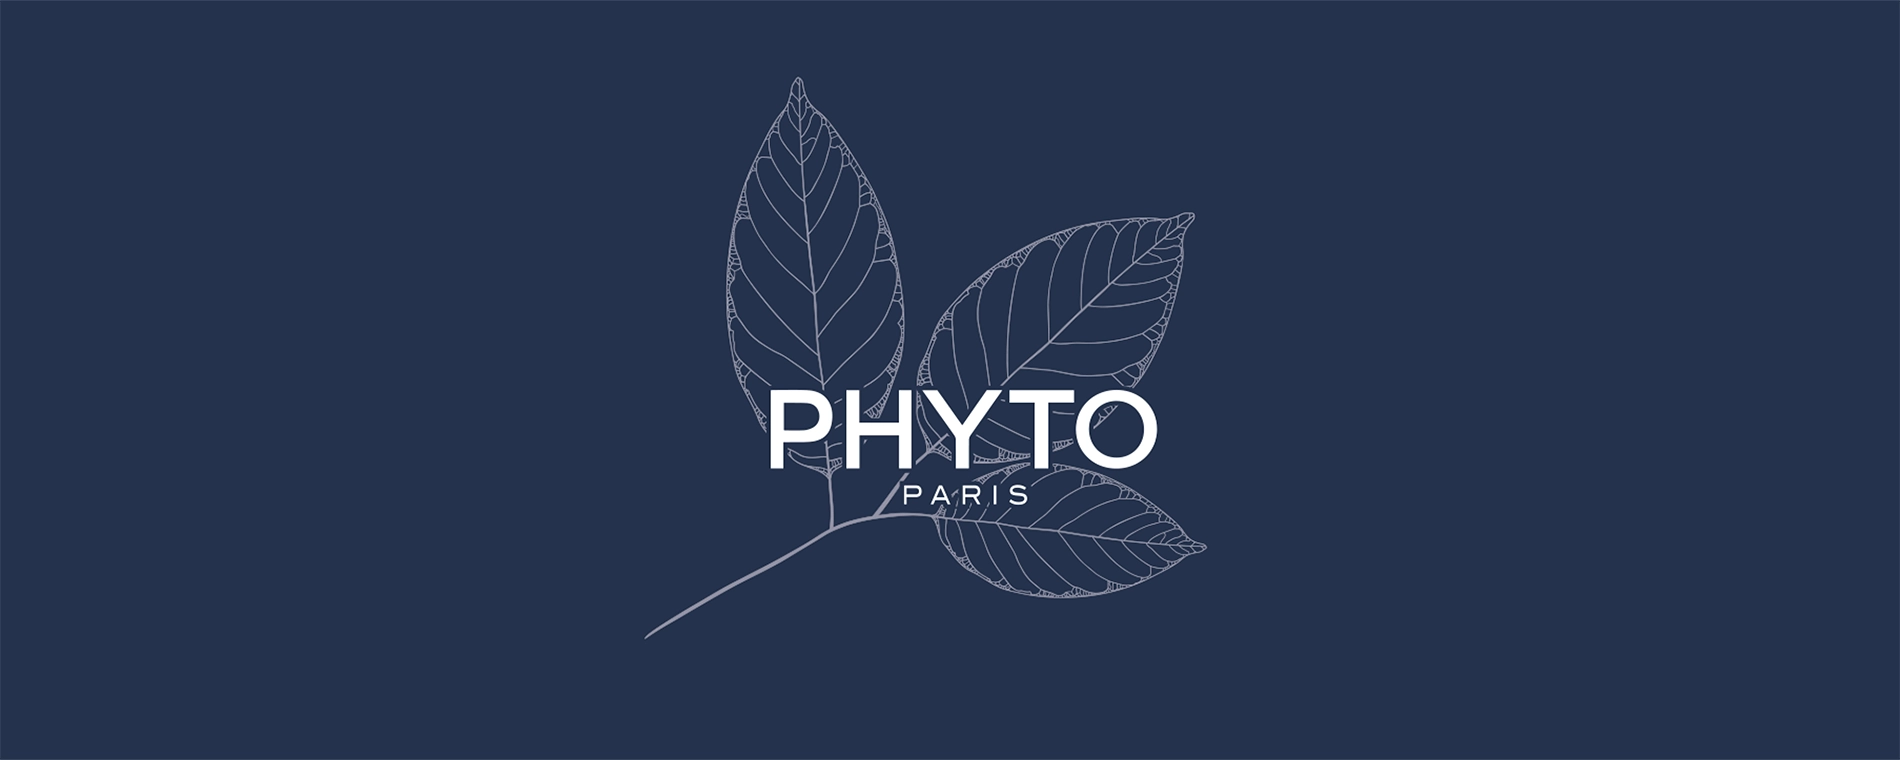 Phyto Banner